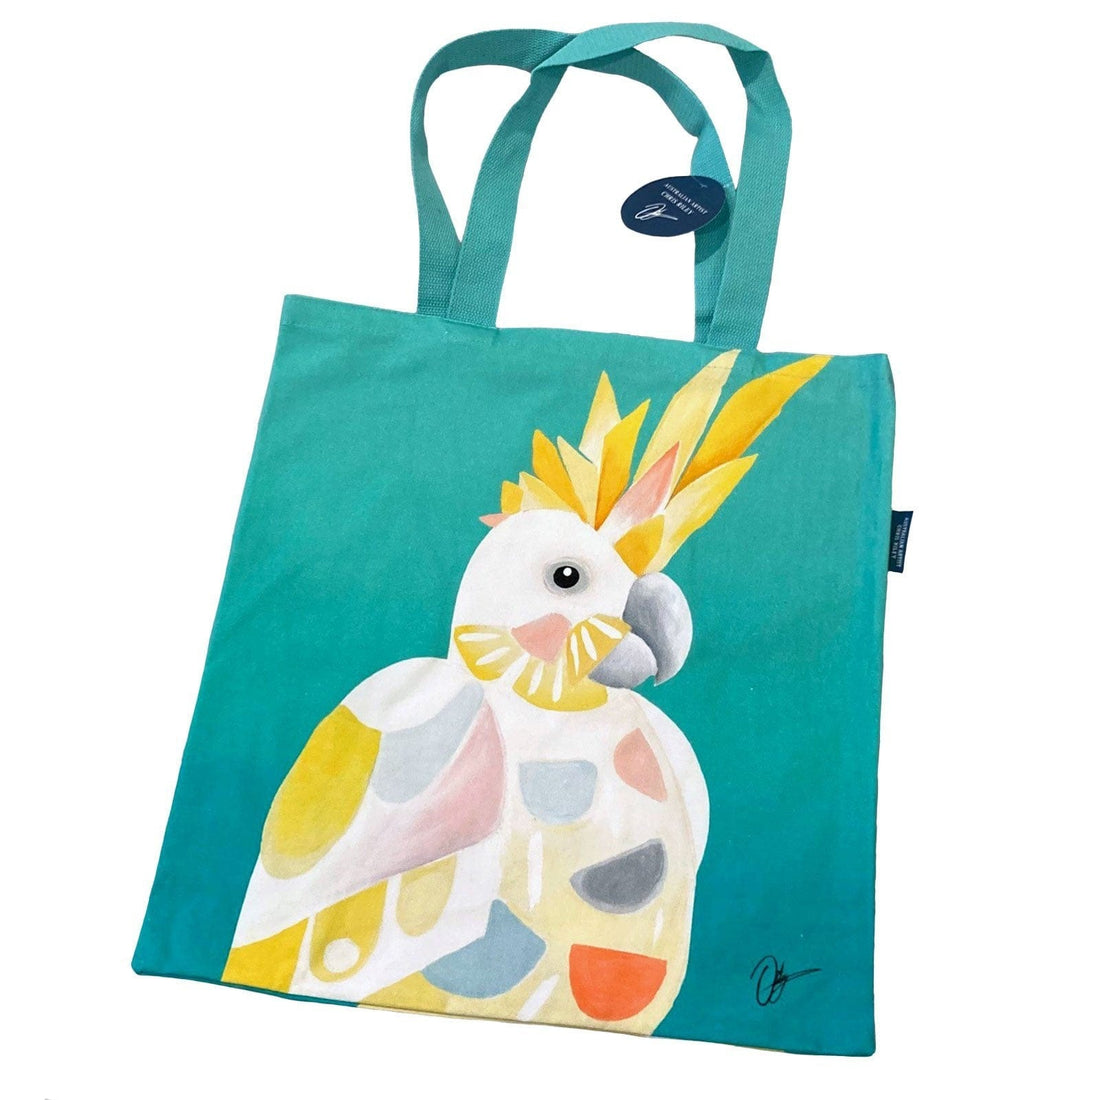 Cockatoo Tote Bag - Chris Riley Design.